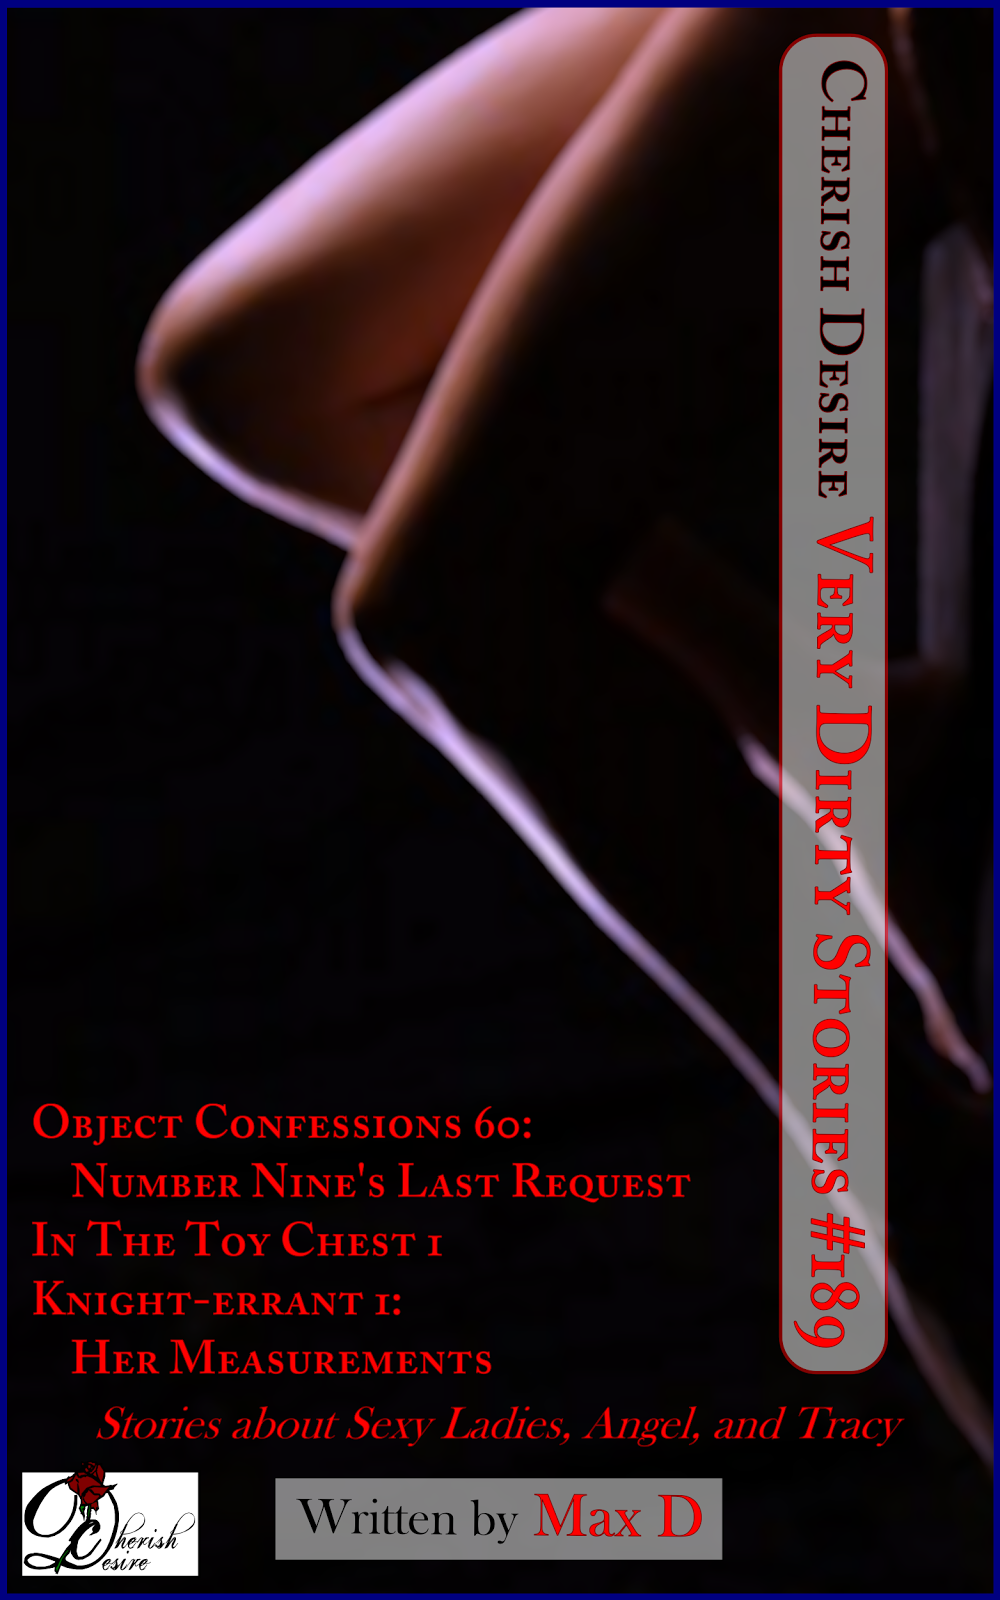 Cherish Desire: Very Dirty Stories #189, Max D, erotica